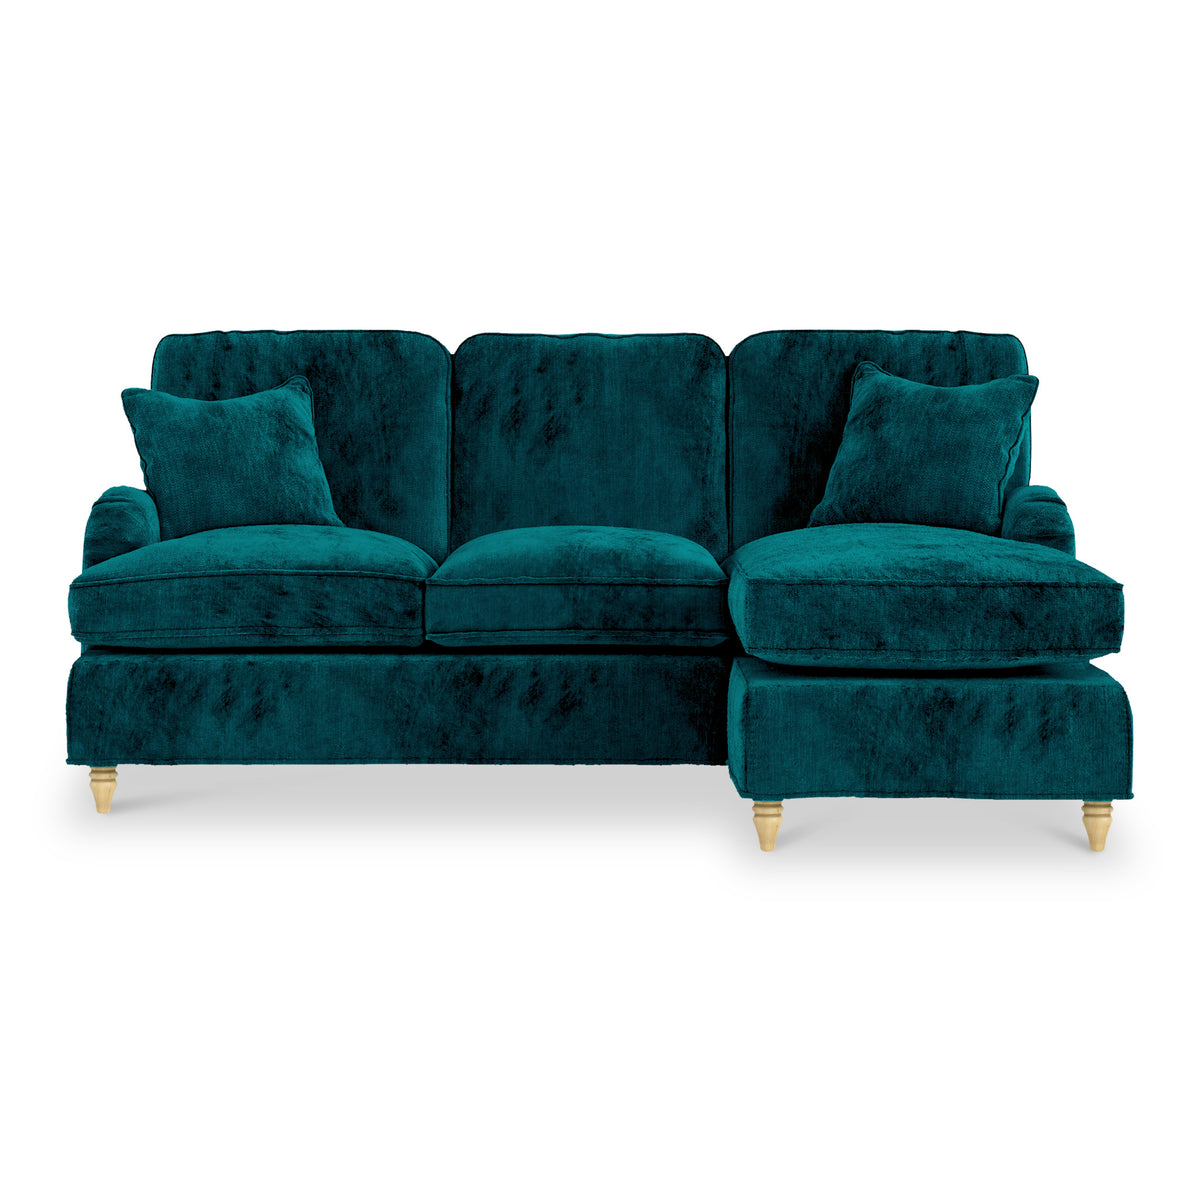 Arthur Emerald Green RH Chaise Sofa from Roseland Furniture